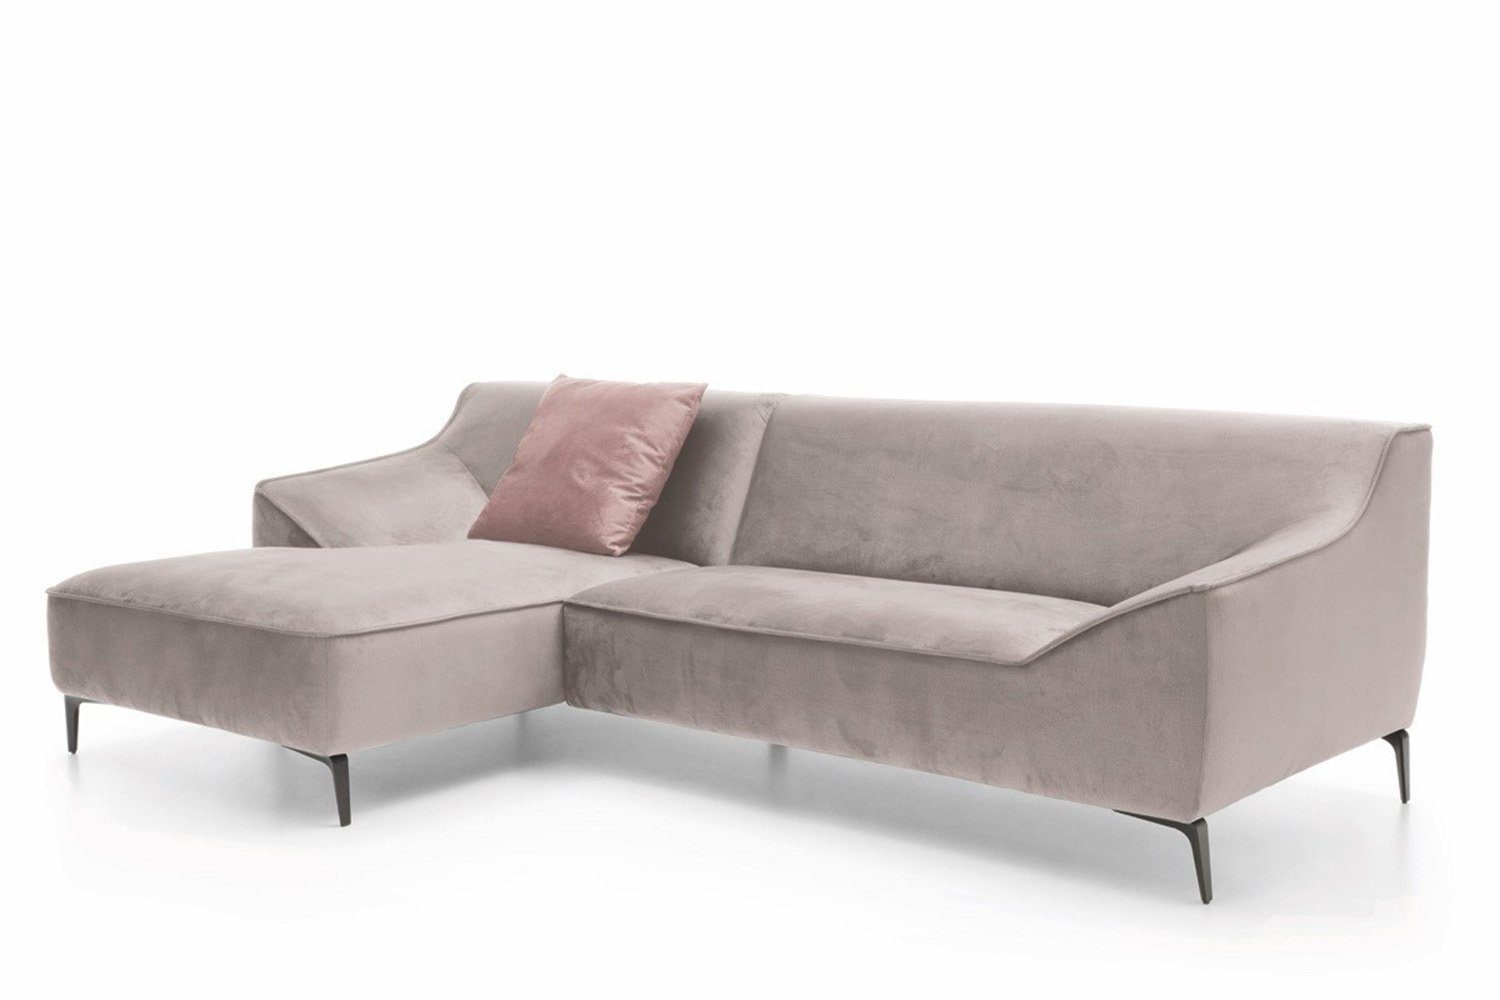 KAWOLA Ecksofa TUNIA, Sofa Recamiere Farben versch. od. rosa rechts, links Velvet